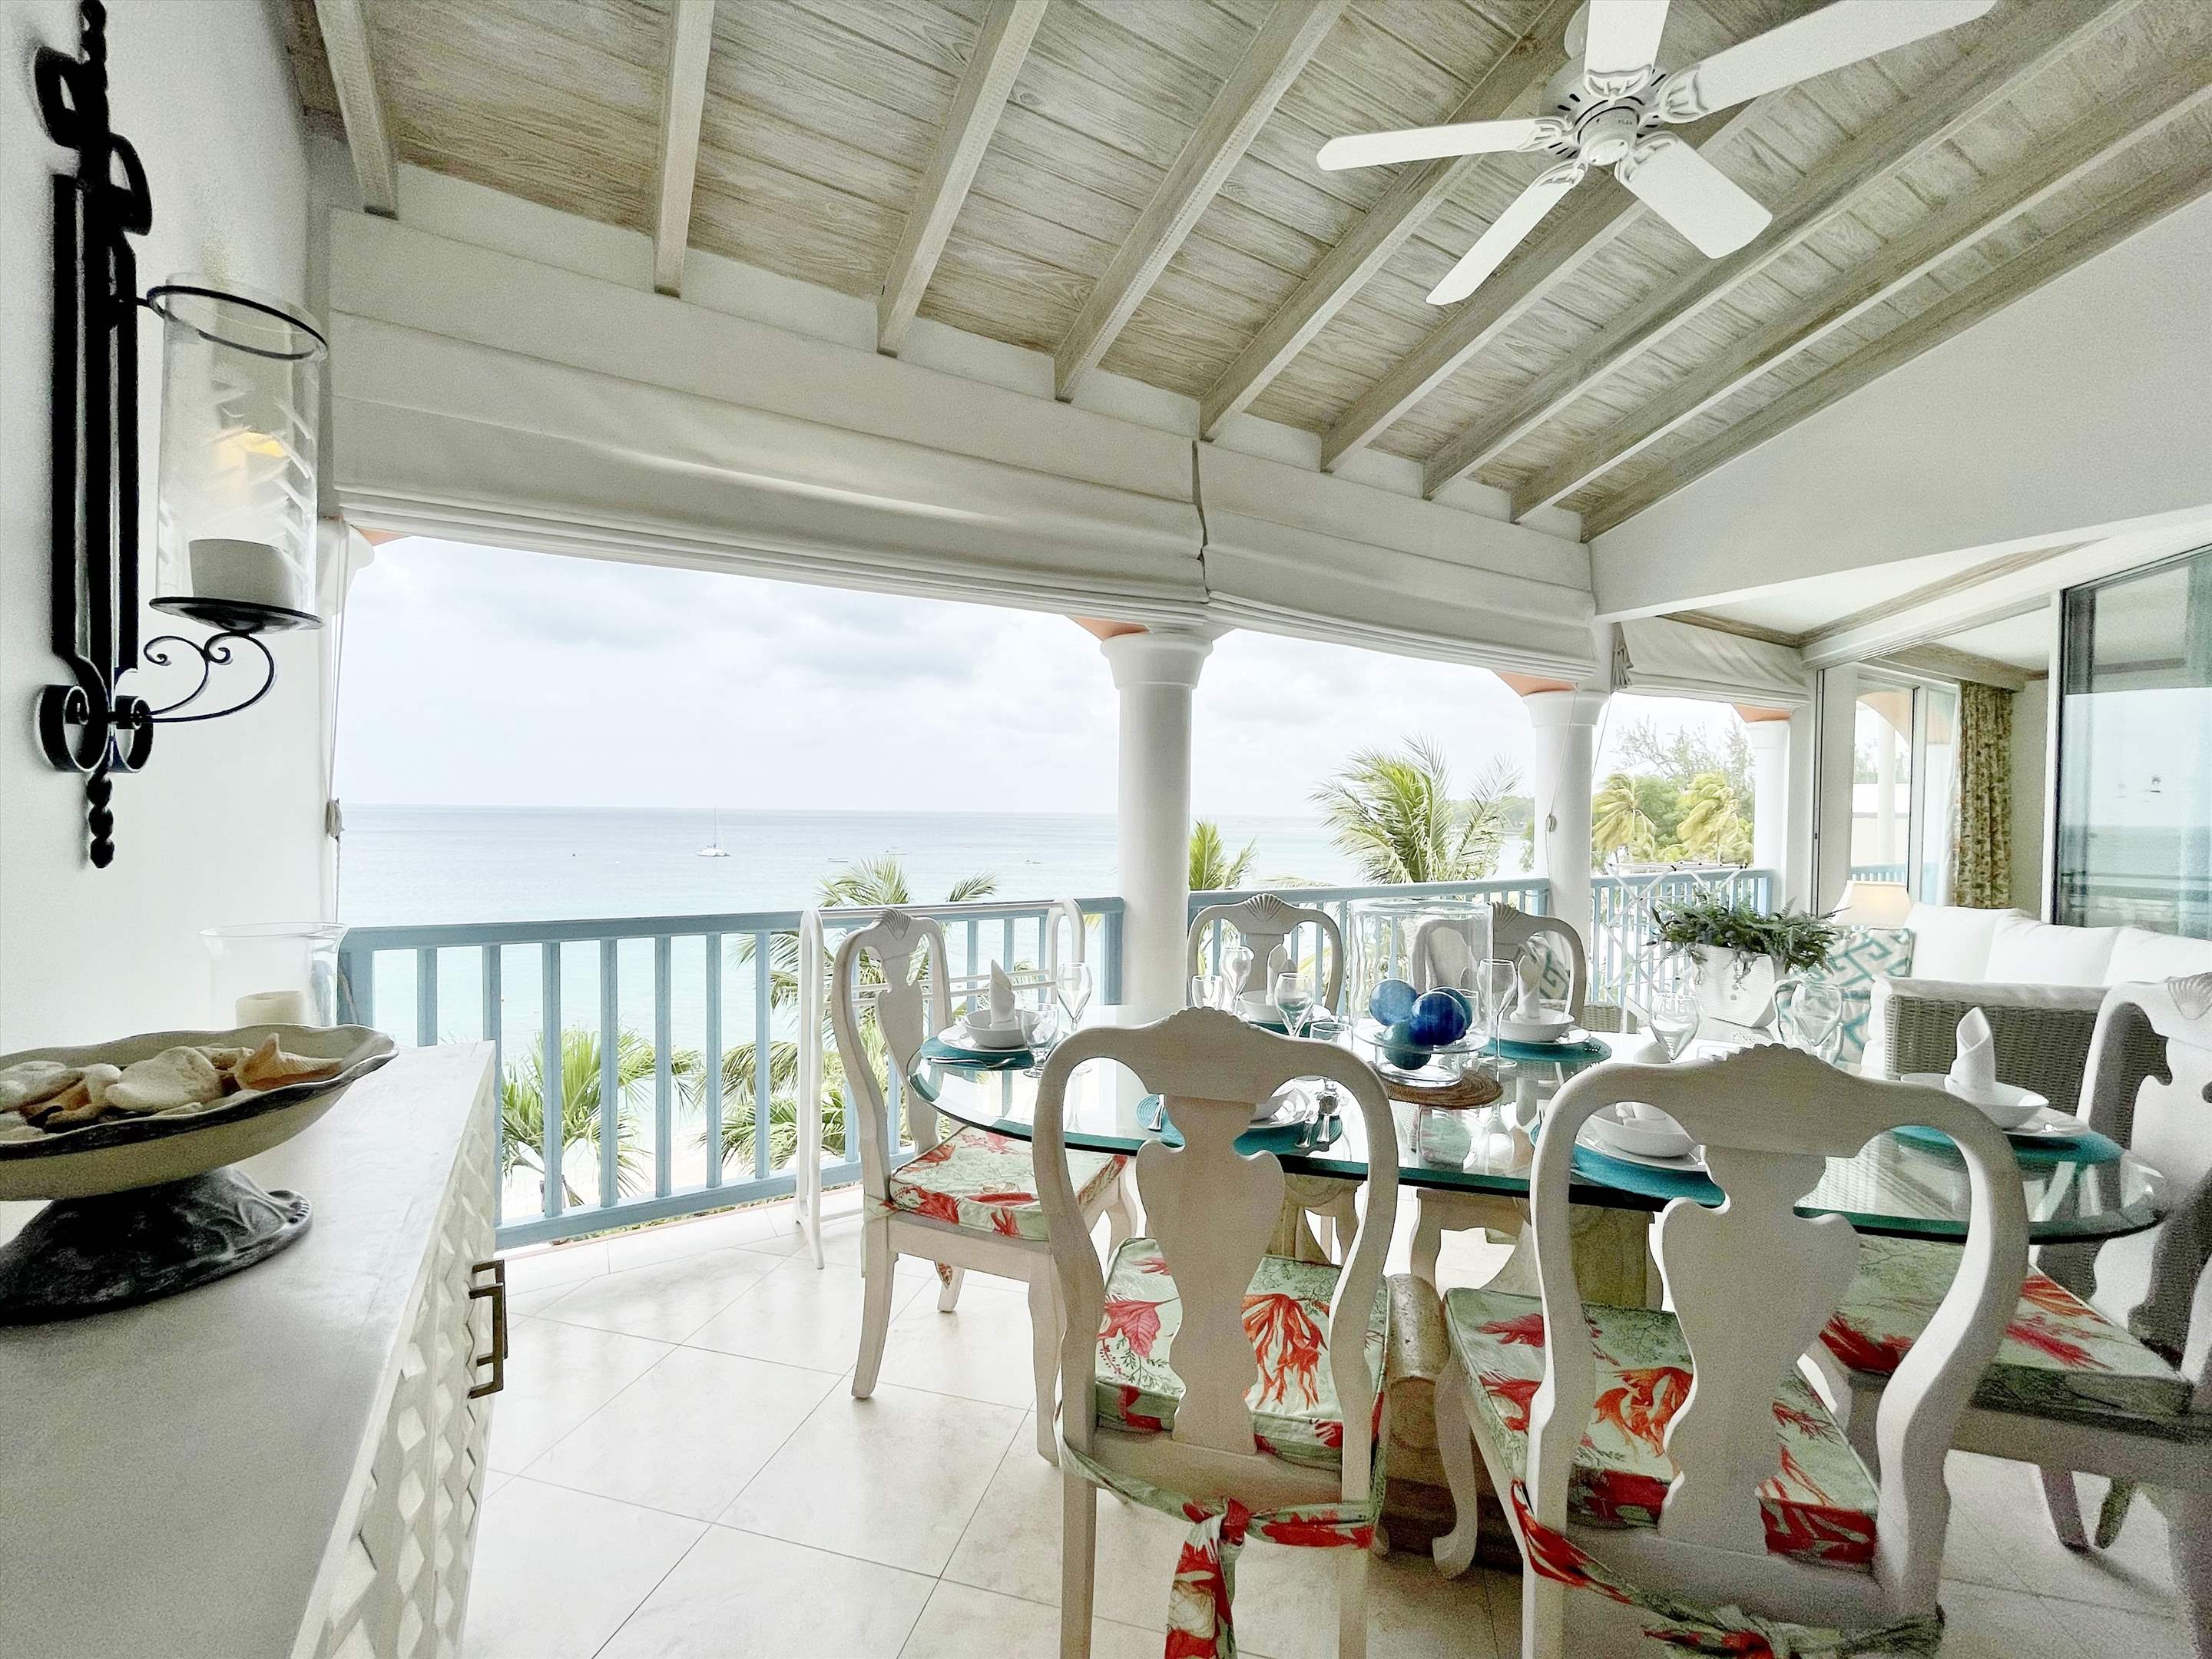 Villas on the Beach 403, 2 bedroom, 2 bedroom apartment in St. James & West Coast, Barbados Photo #8